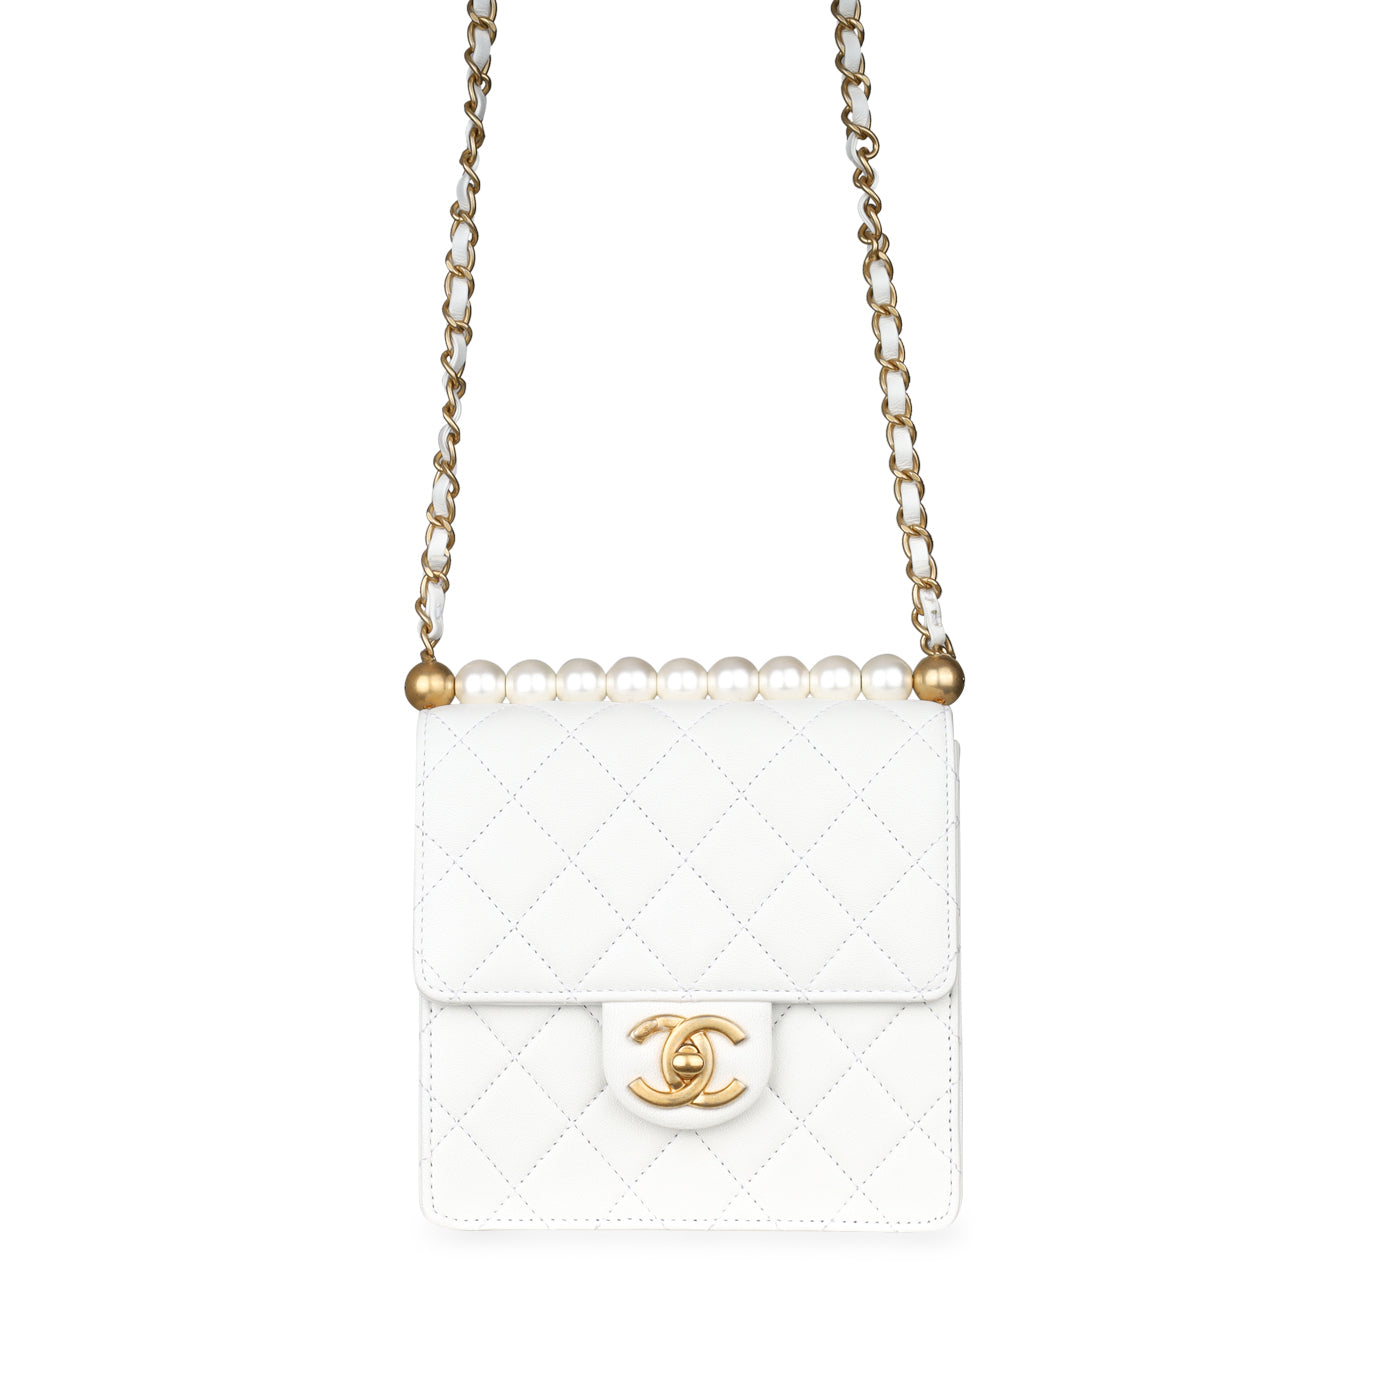 Chanel - Vertical Pearl Flap Bag - White Calfskin - GHW - Pre-Loved